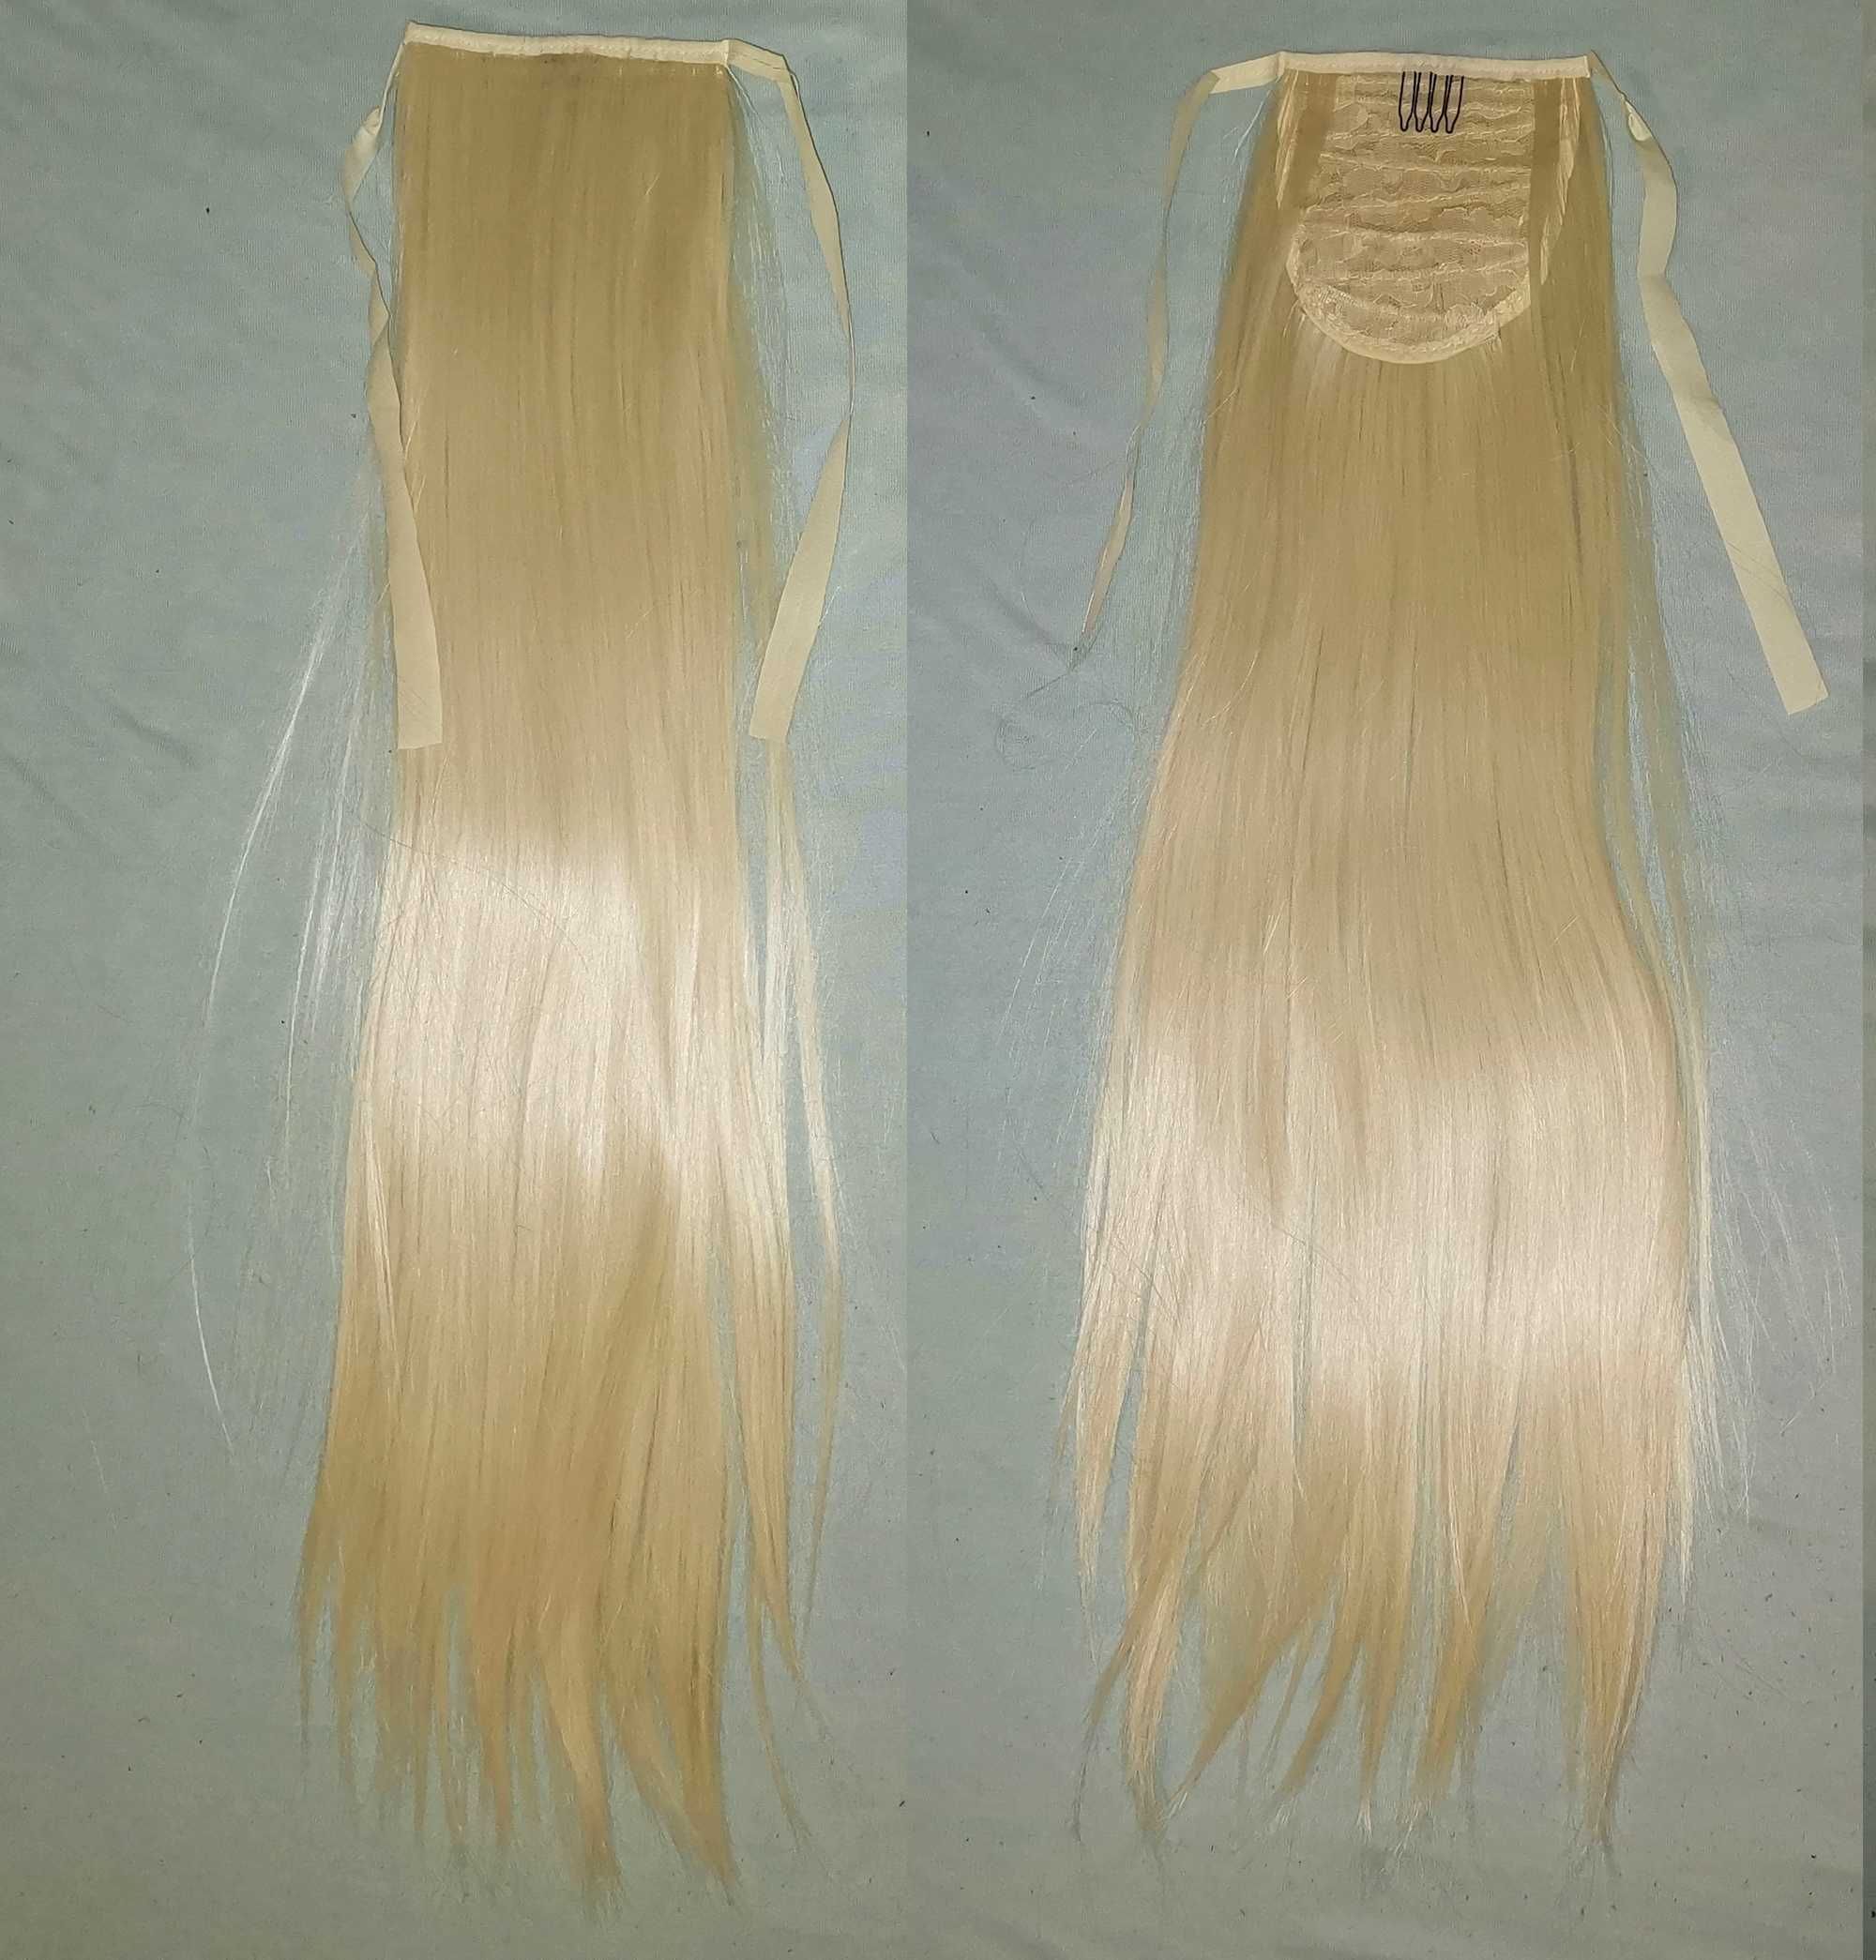 Coada par sintetic, extensie ponytail intins: BLOND DESCHIS, 60cm